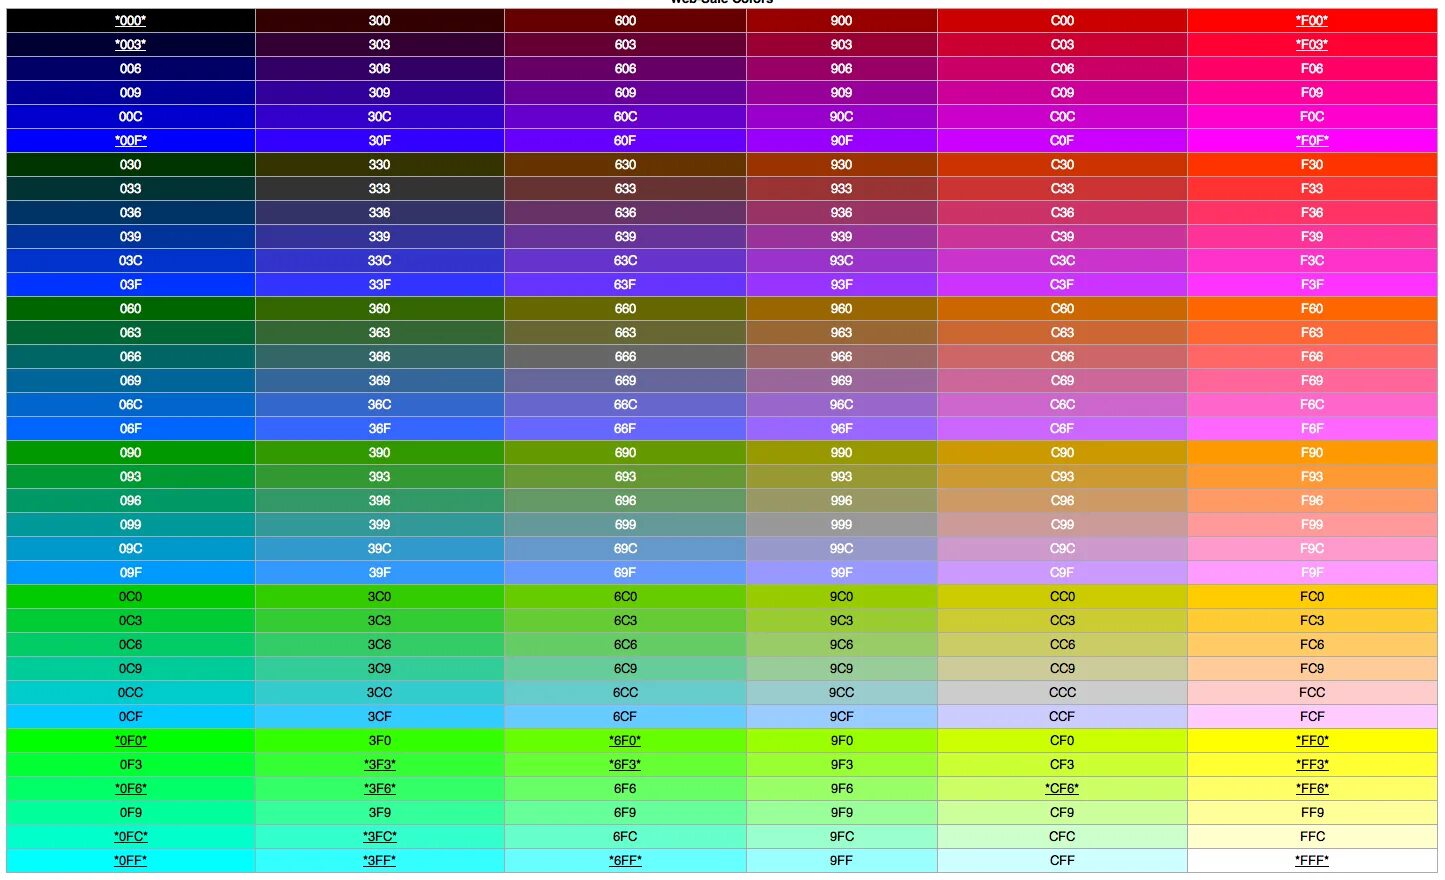 Rgb 204 255 0. РГБ коды цветов. Цветовой код РГБ. Таблица РЖБ цветов. Таблица коды РГБ цветов.